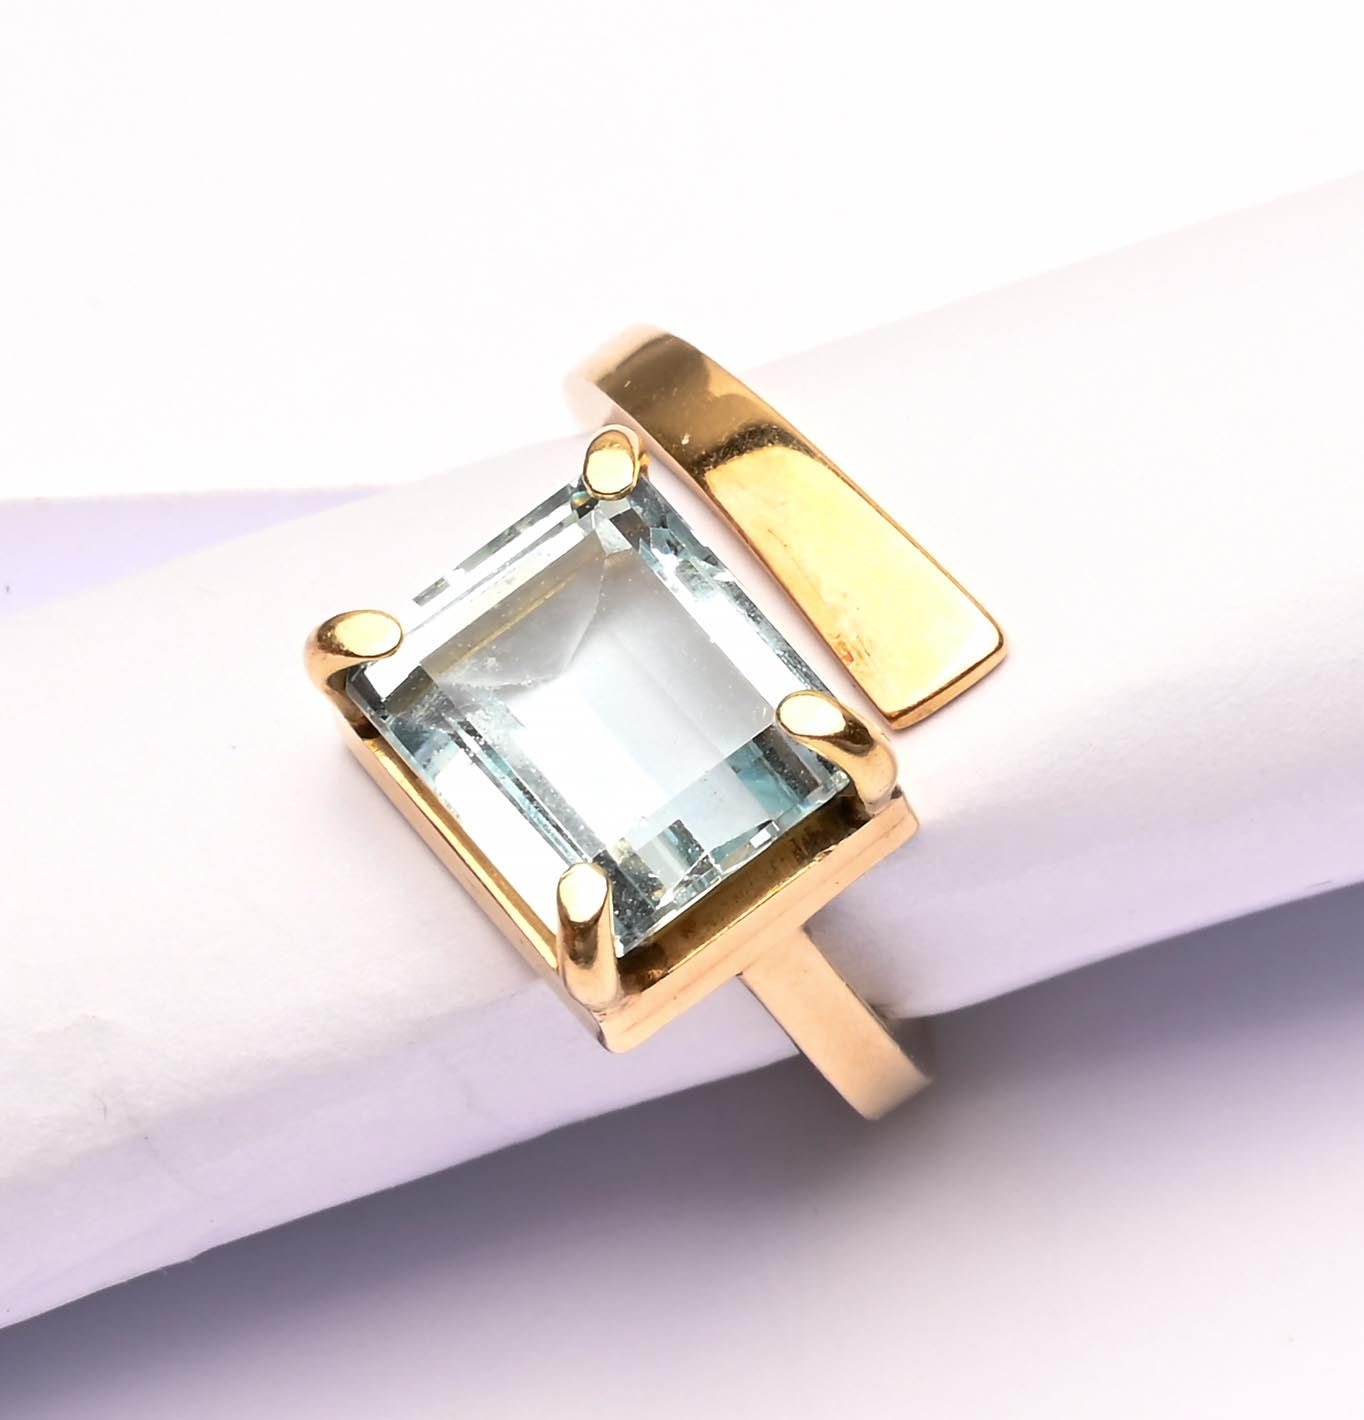 gold-and-aquamarine-ring-1-1457301